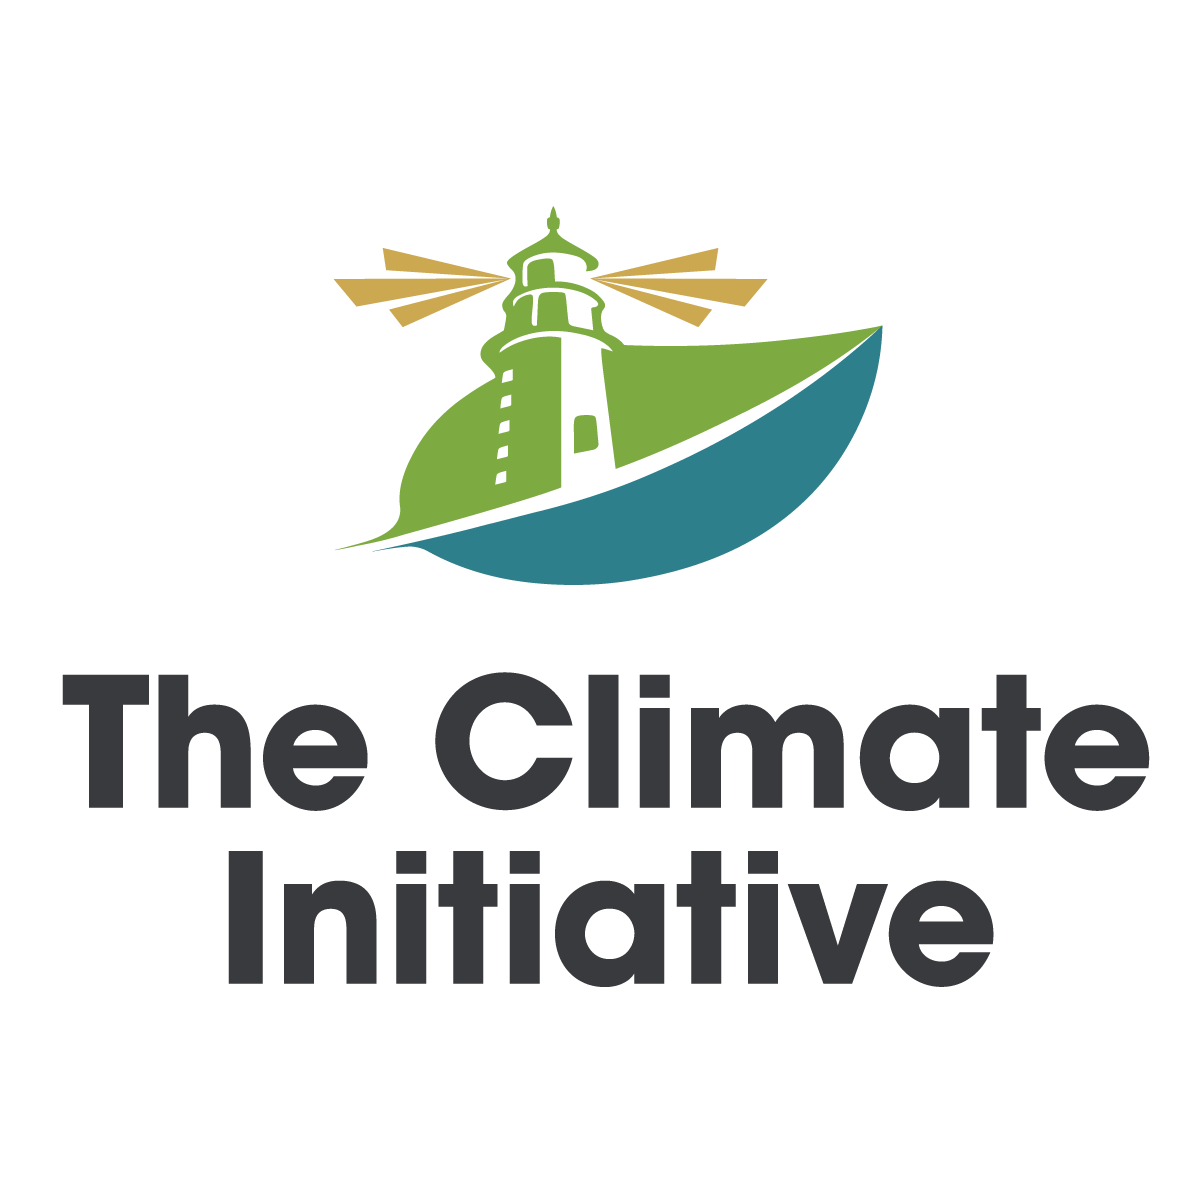 The Climate Initiative website